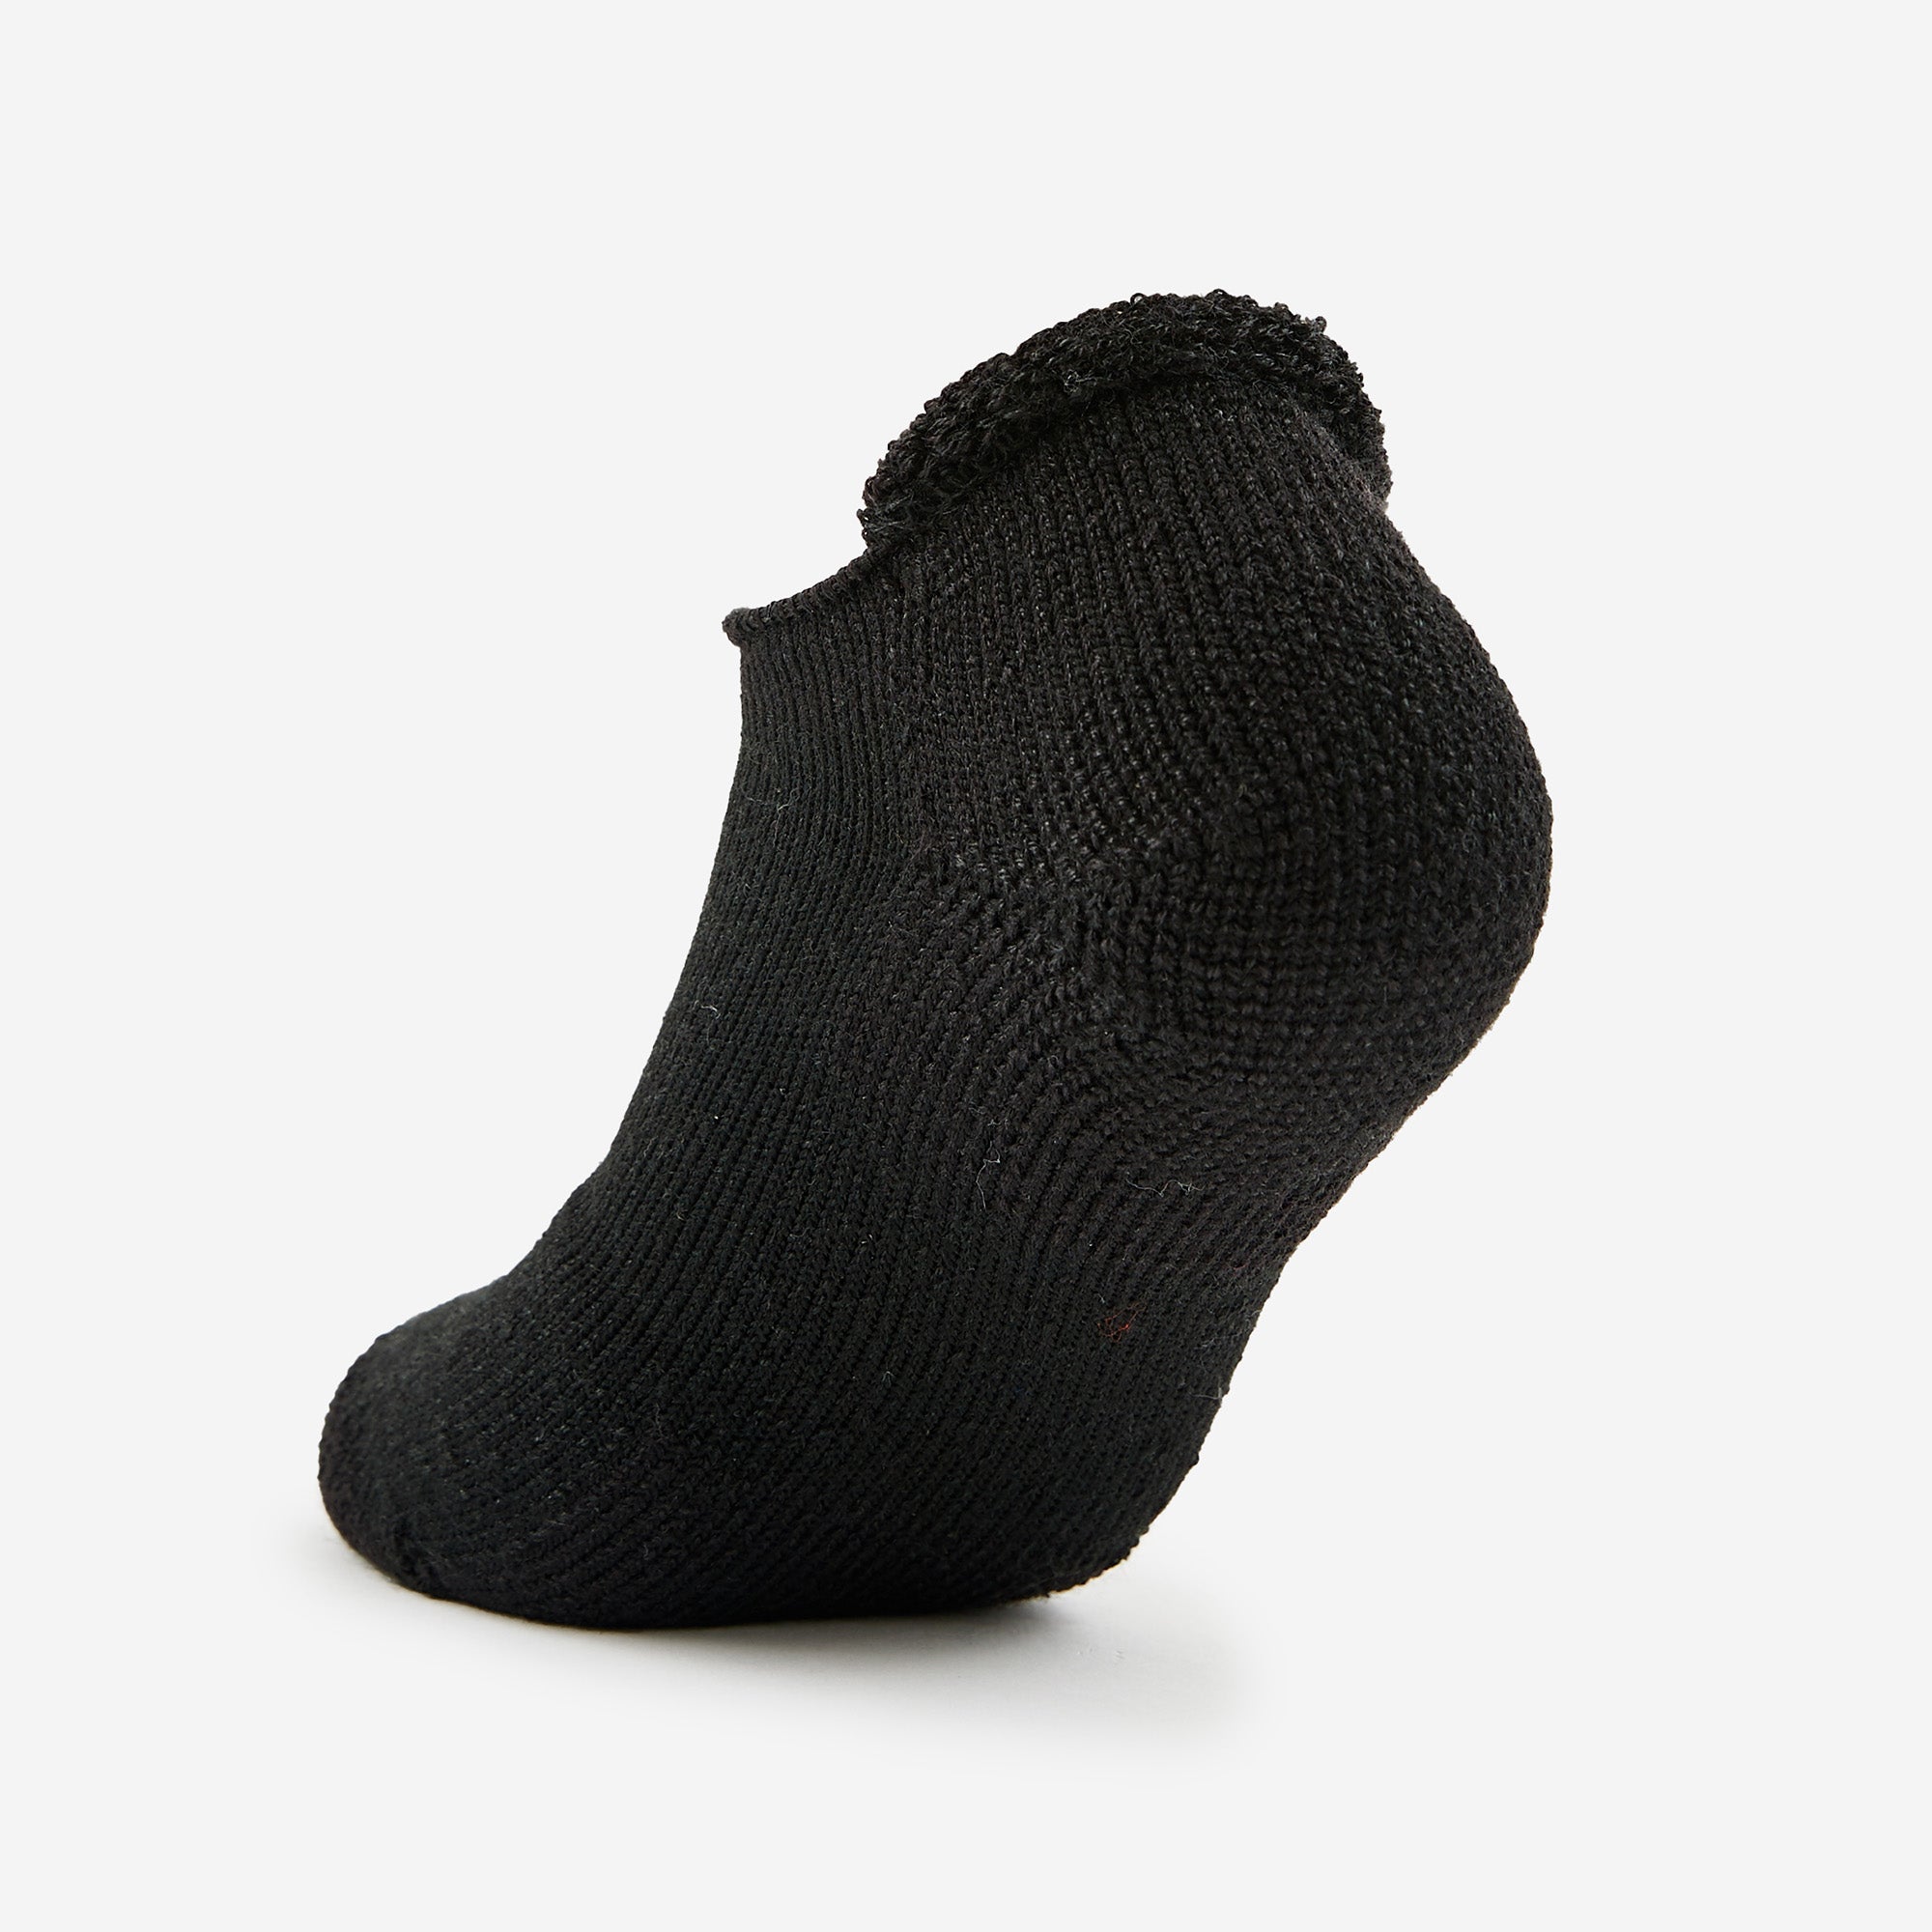 Maximum Cushion Rolltop Tennis Socks | Thorlo